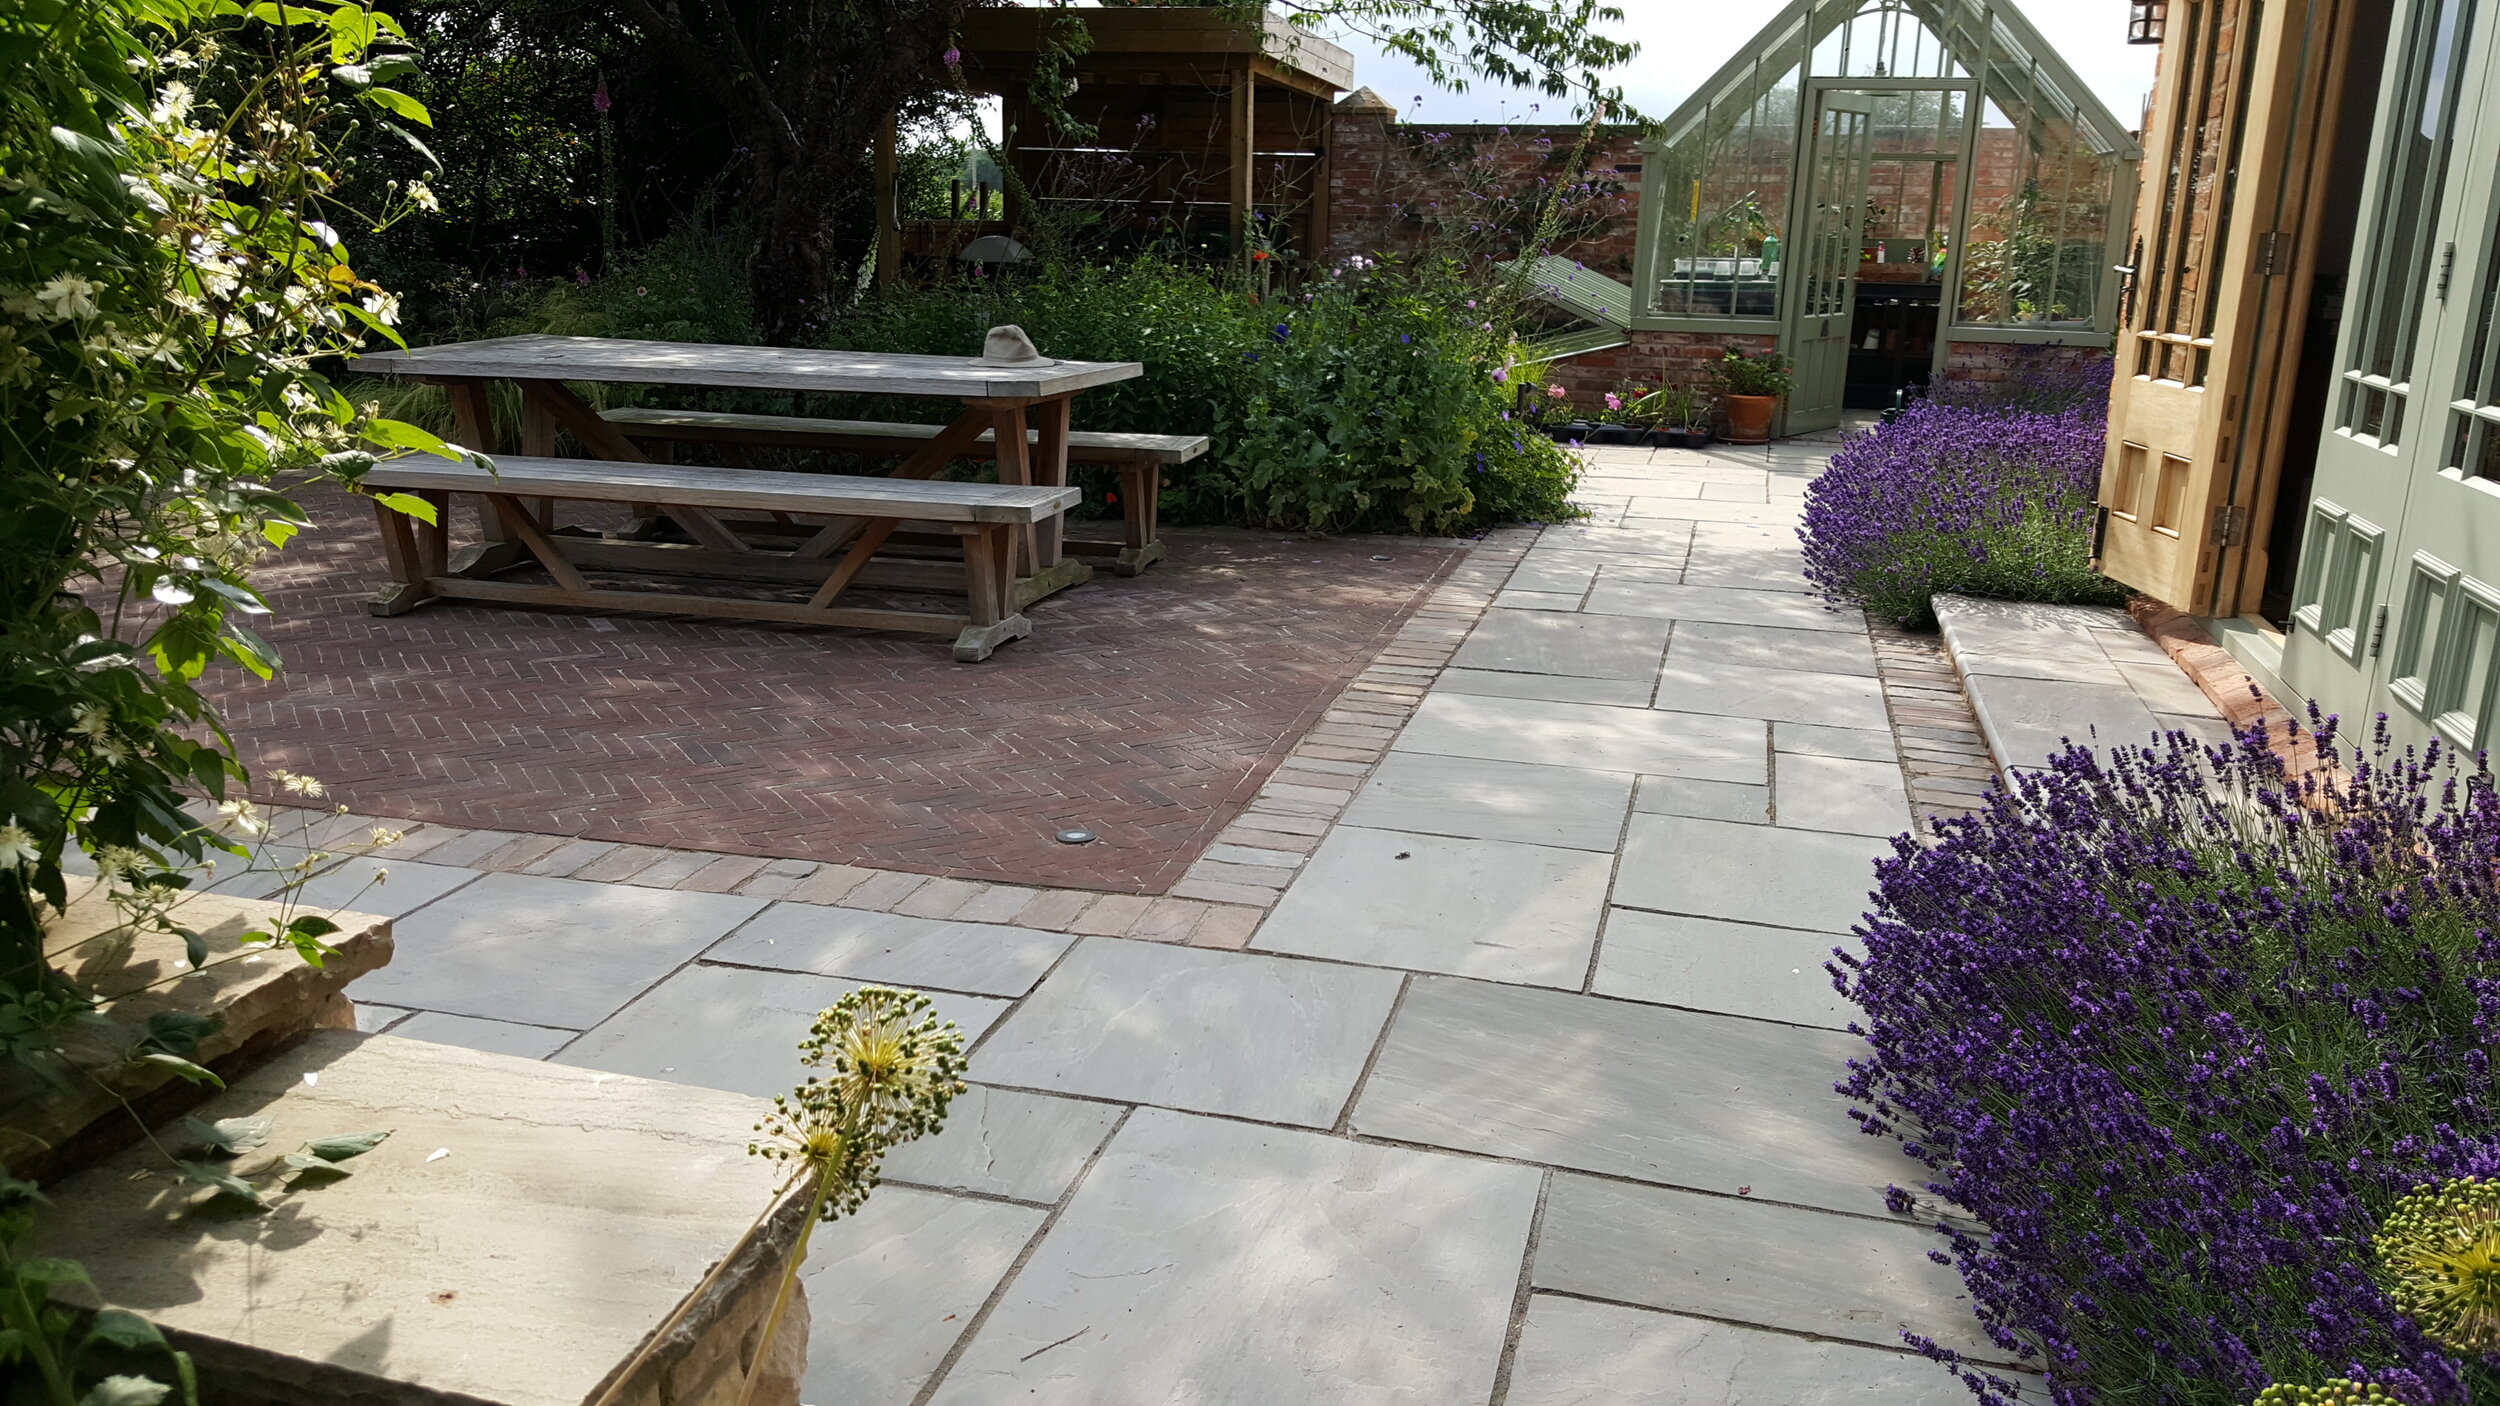 9 Garden design Lincolnshire - paved path brick terrace garden table greenhouse.jpg